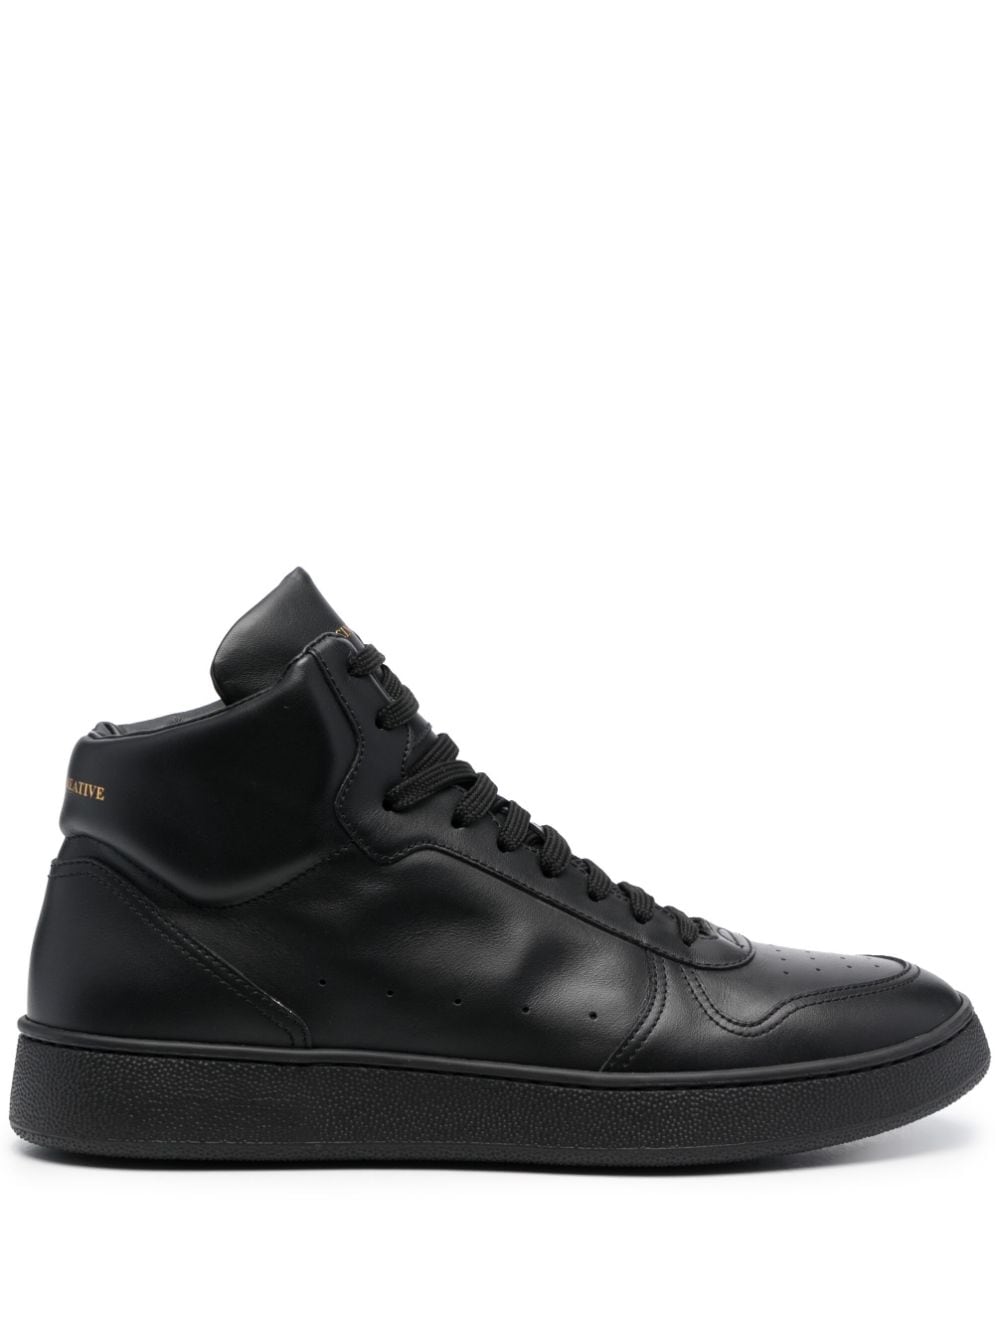 Officine Creative Mower high-top leather sneakers - Black von Officine Creative